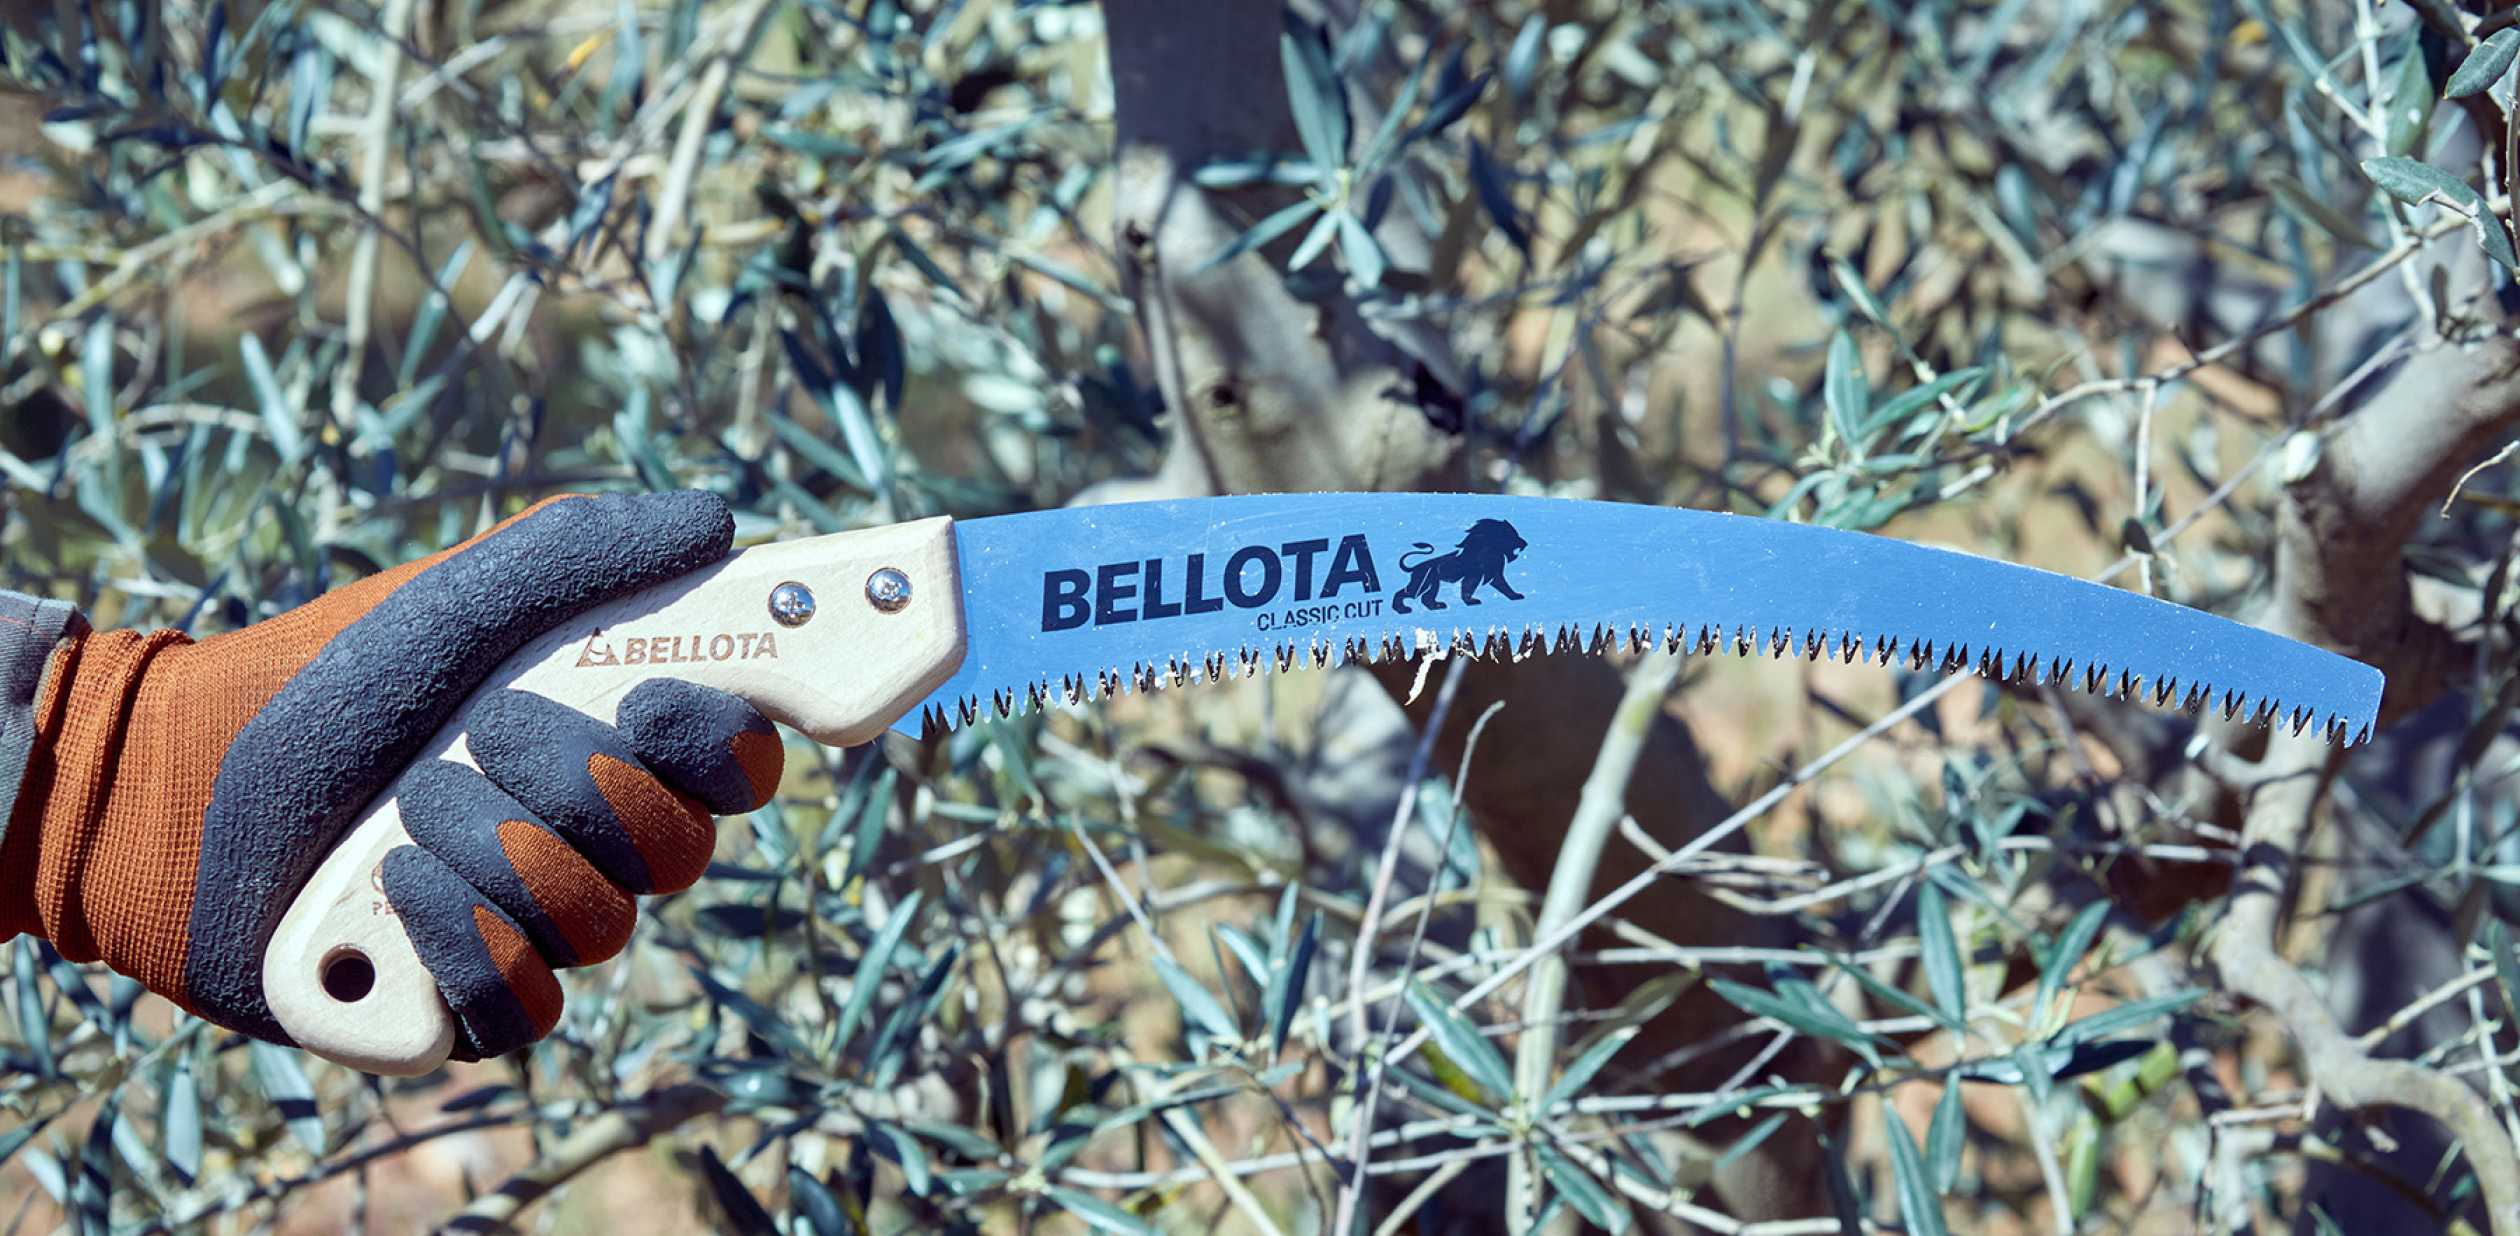 Bellota brand saw